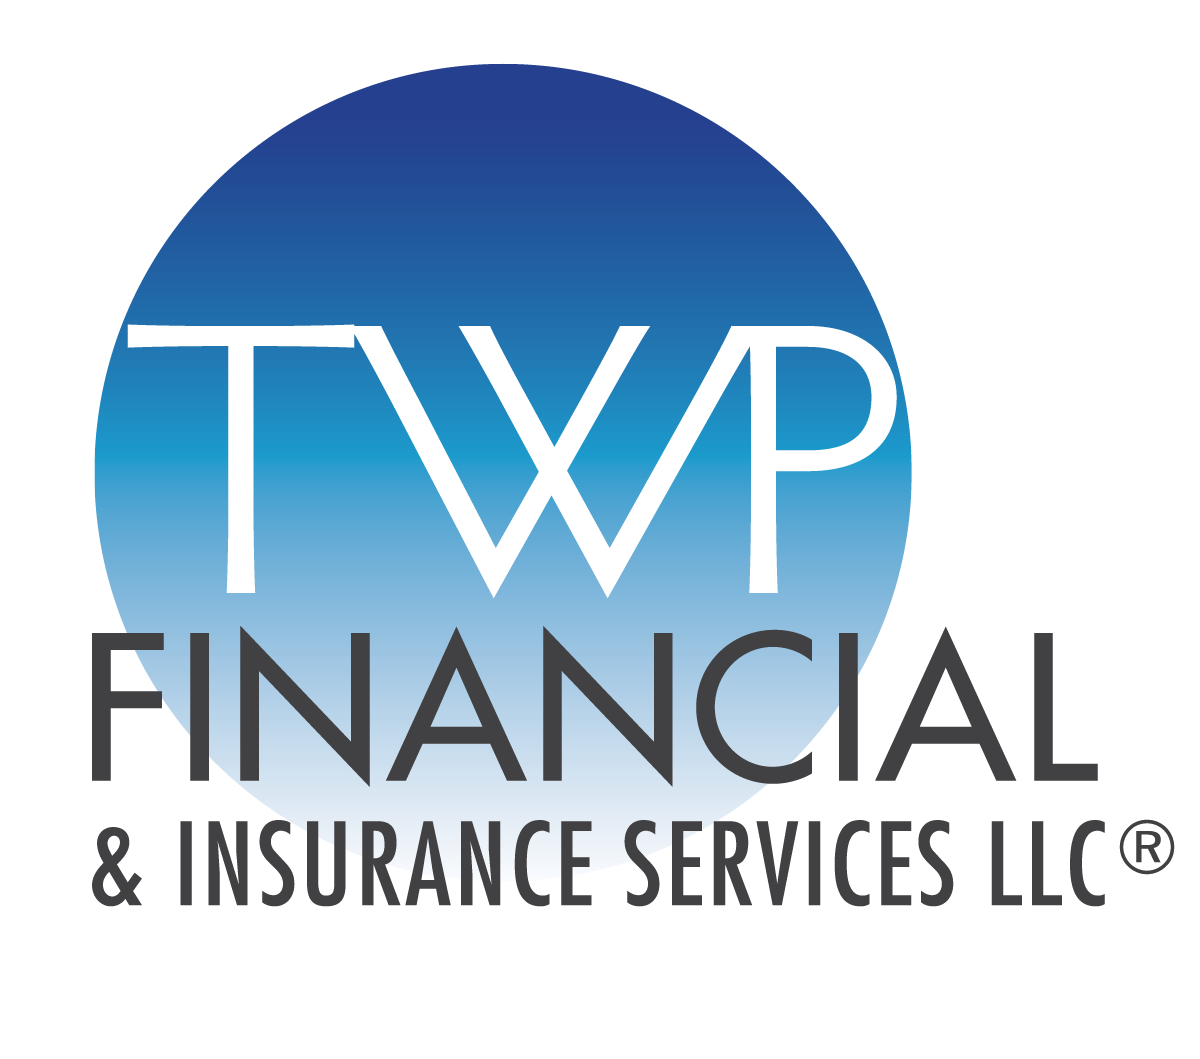 TWP Financial